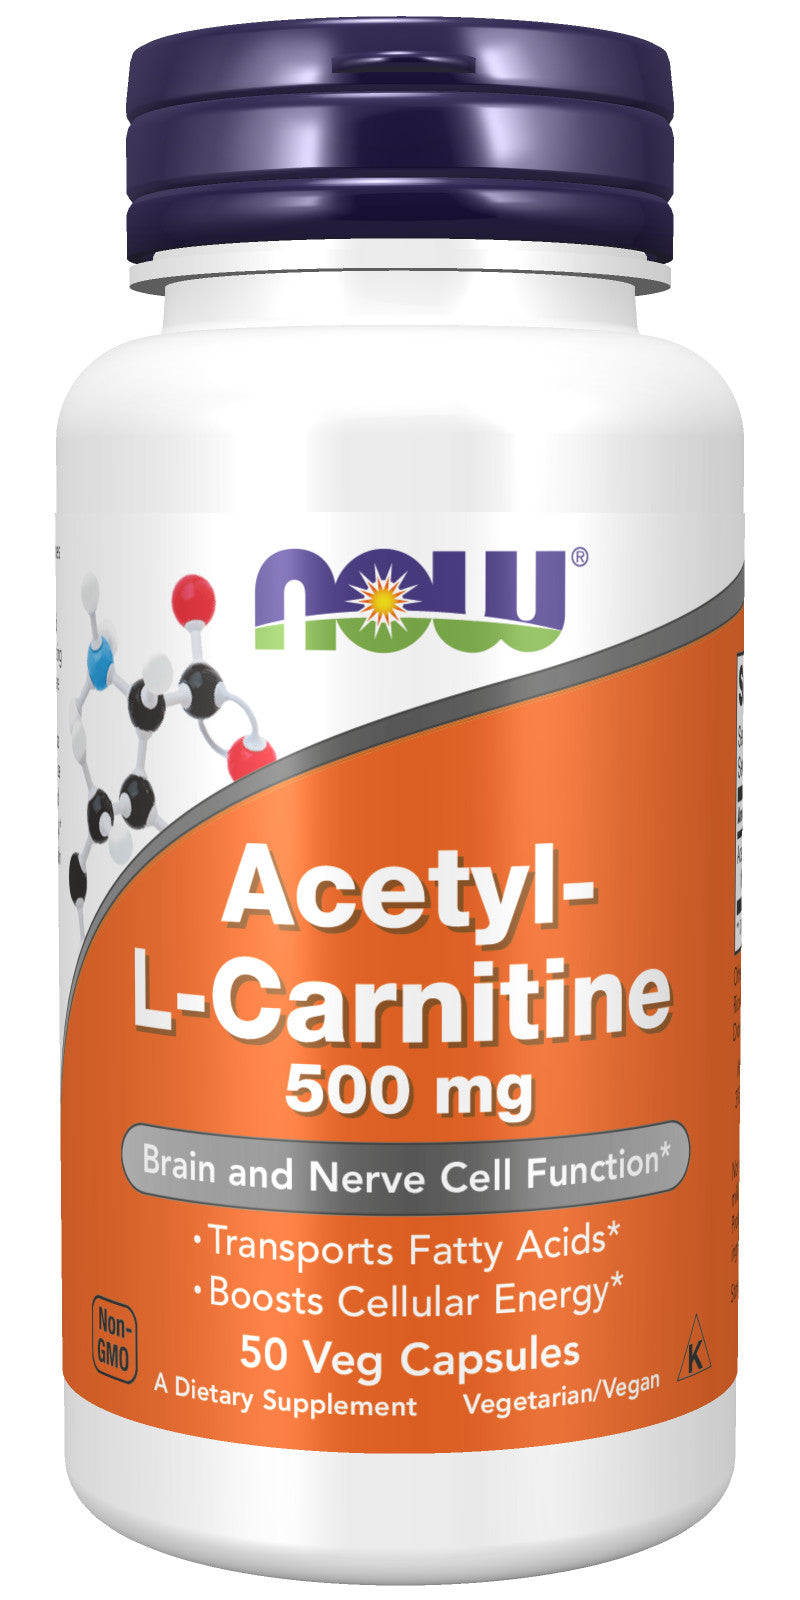 Acetyl-L-Carnitine 500 mg 50 Veg Capsules